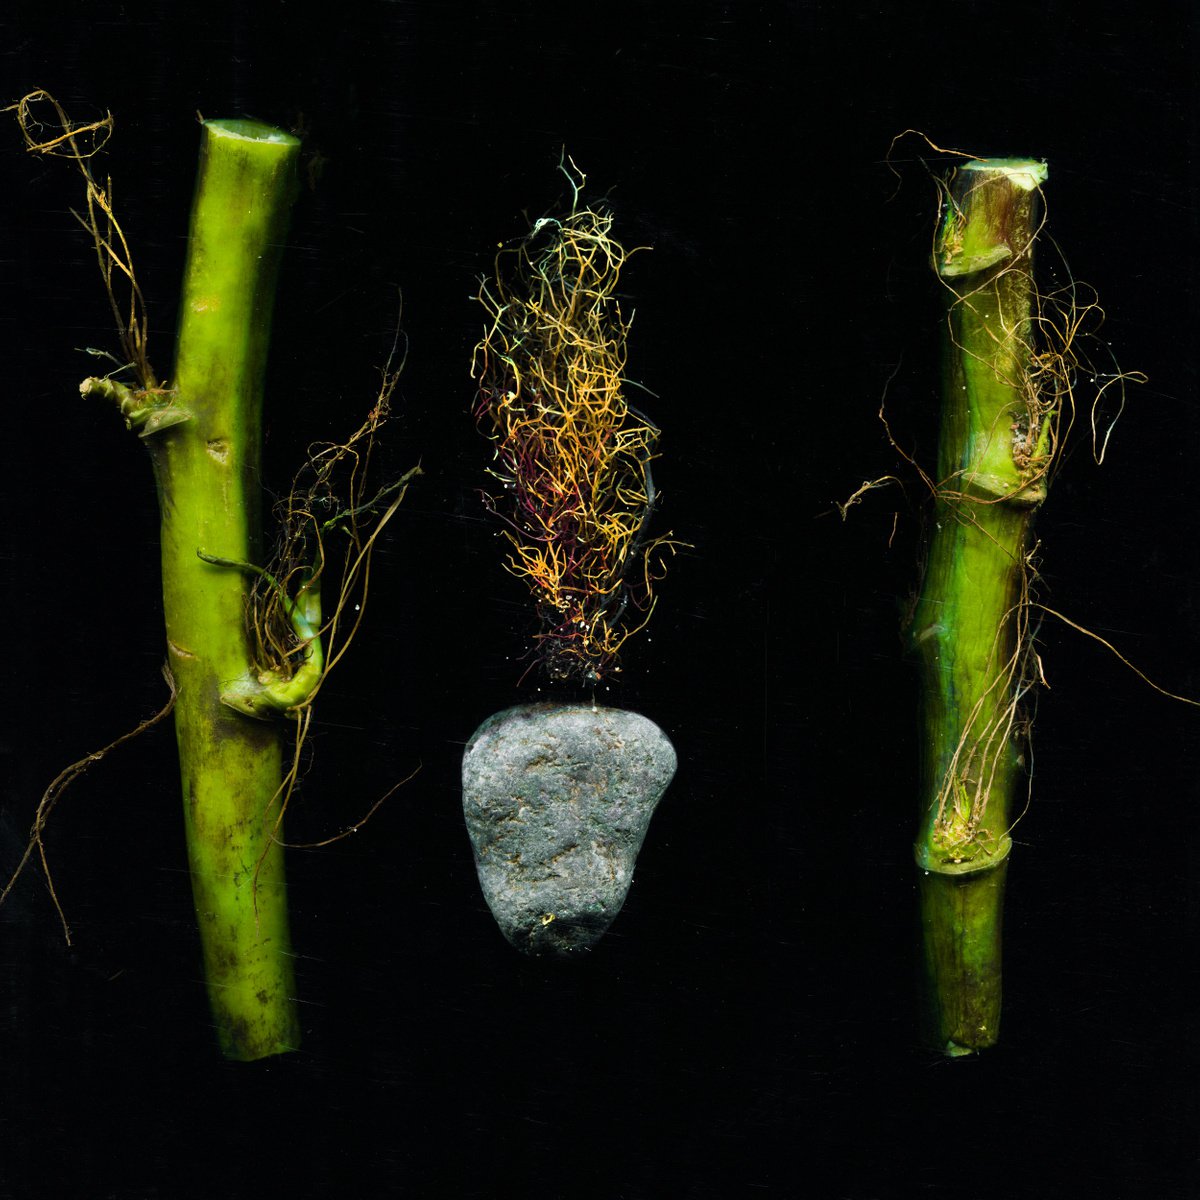 seaweed, stems and algae 7 by Jochim Lichtenberger